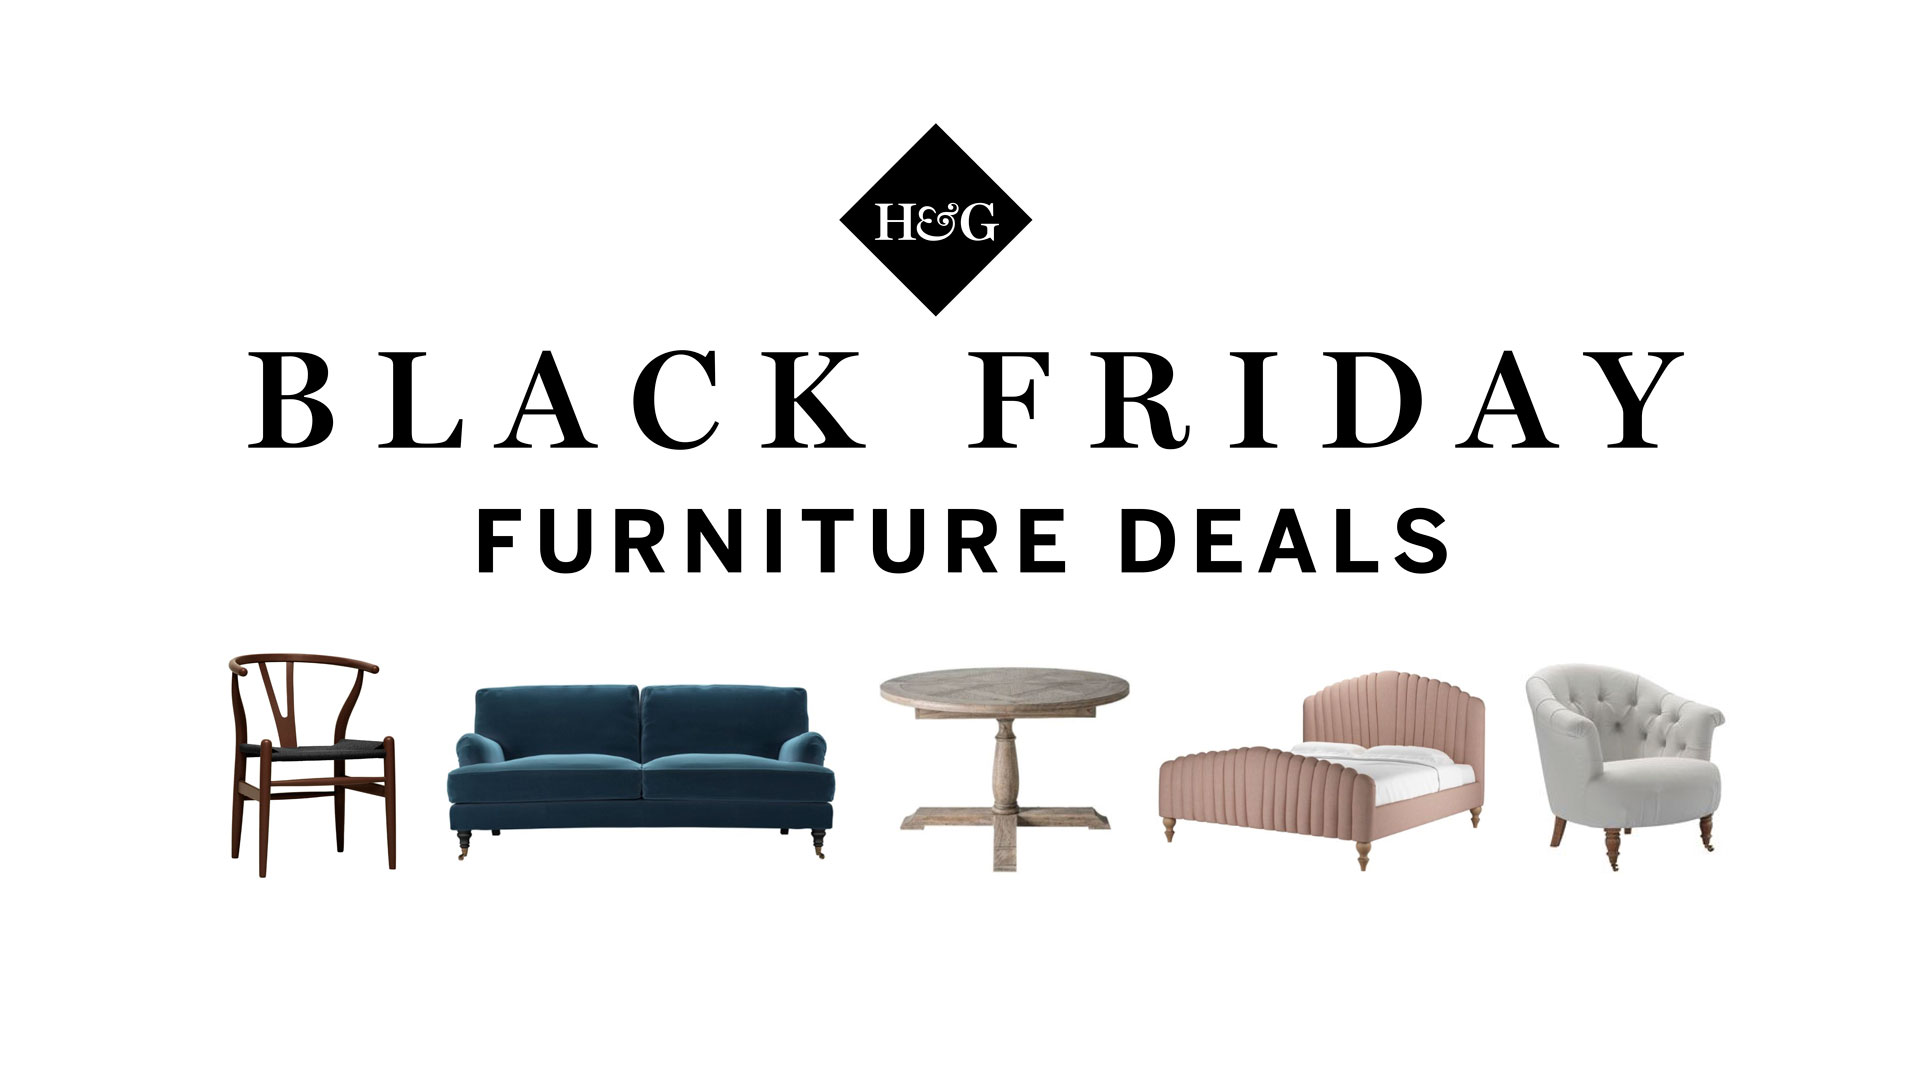 Black Friday furniture deals